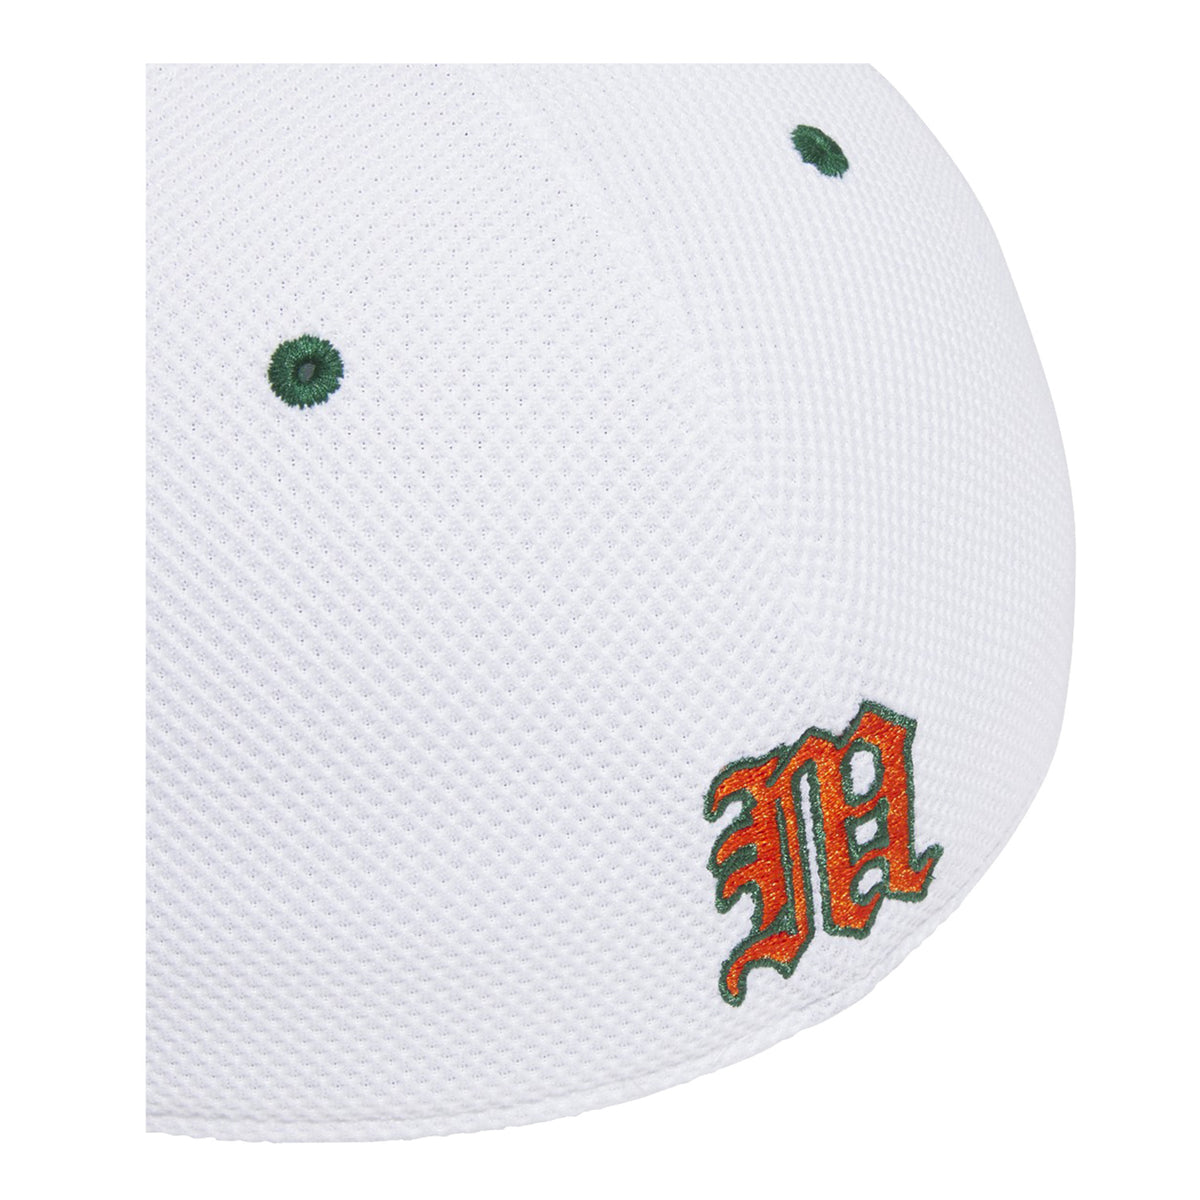 Adidas Miami Baseball Maniac Fitted Hat